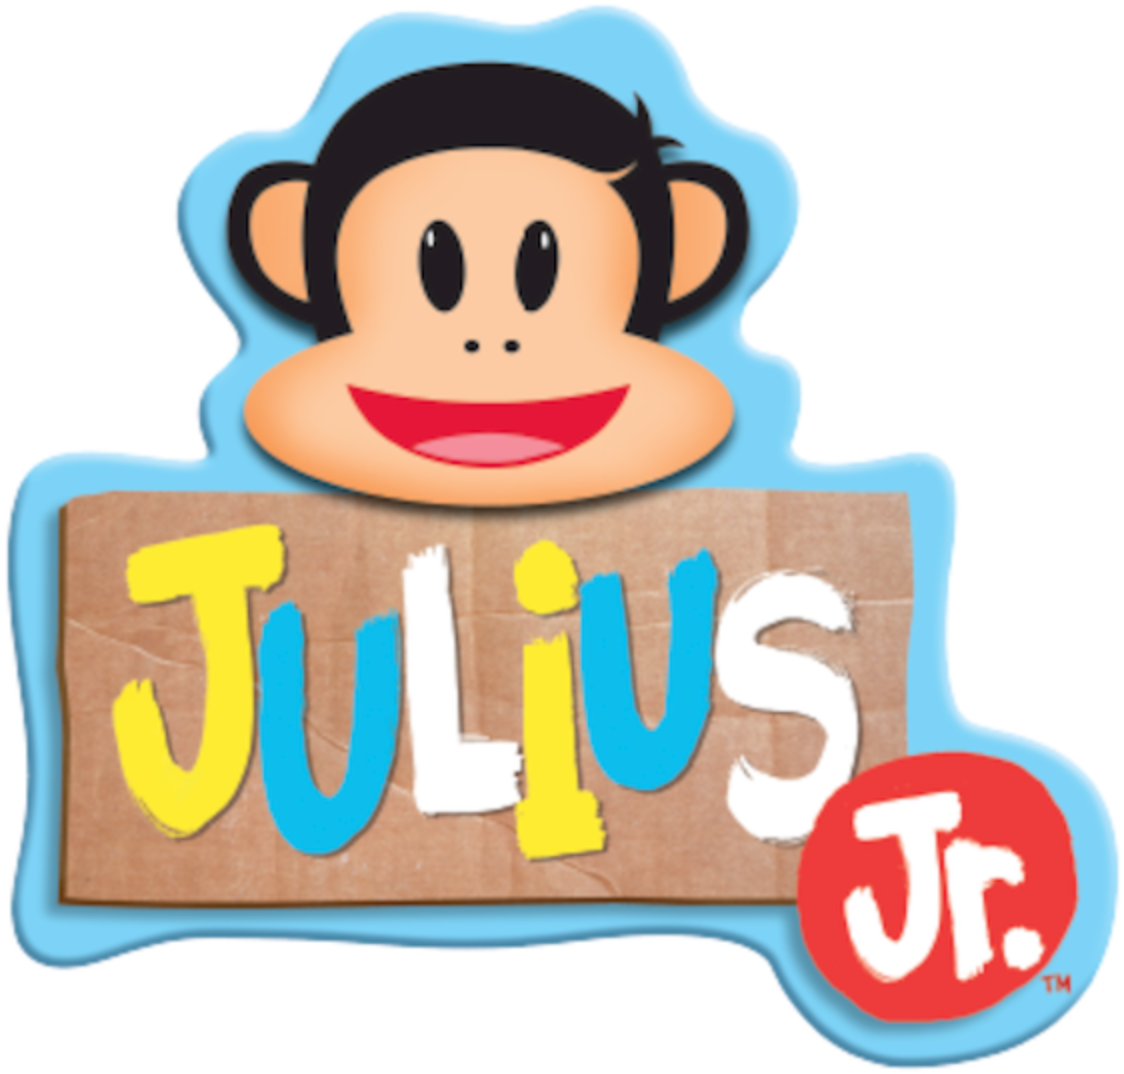 Julius Jr. Complete (2 DVDs Box Set)